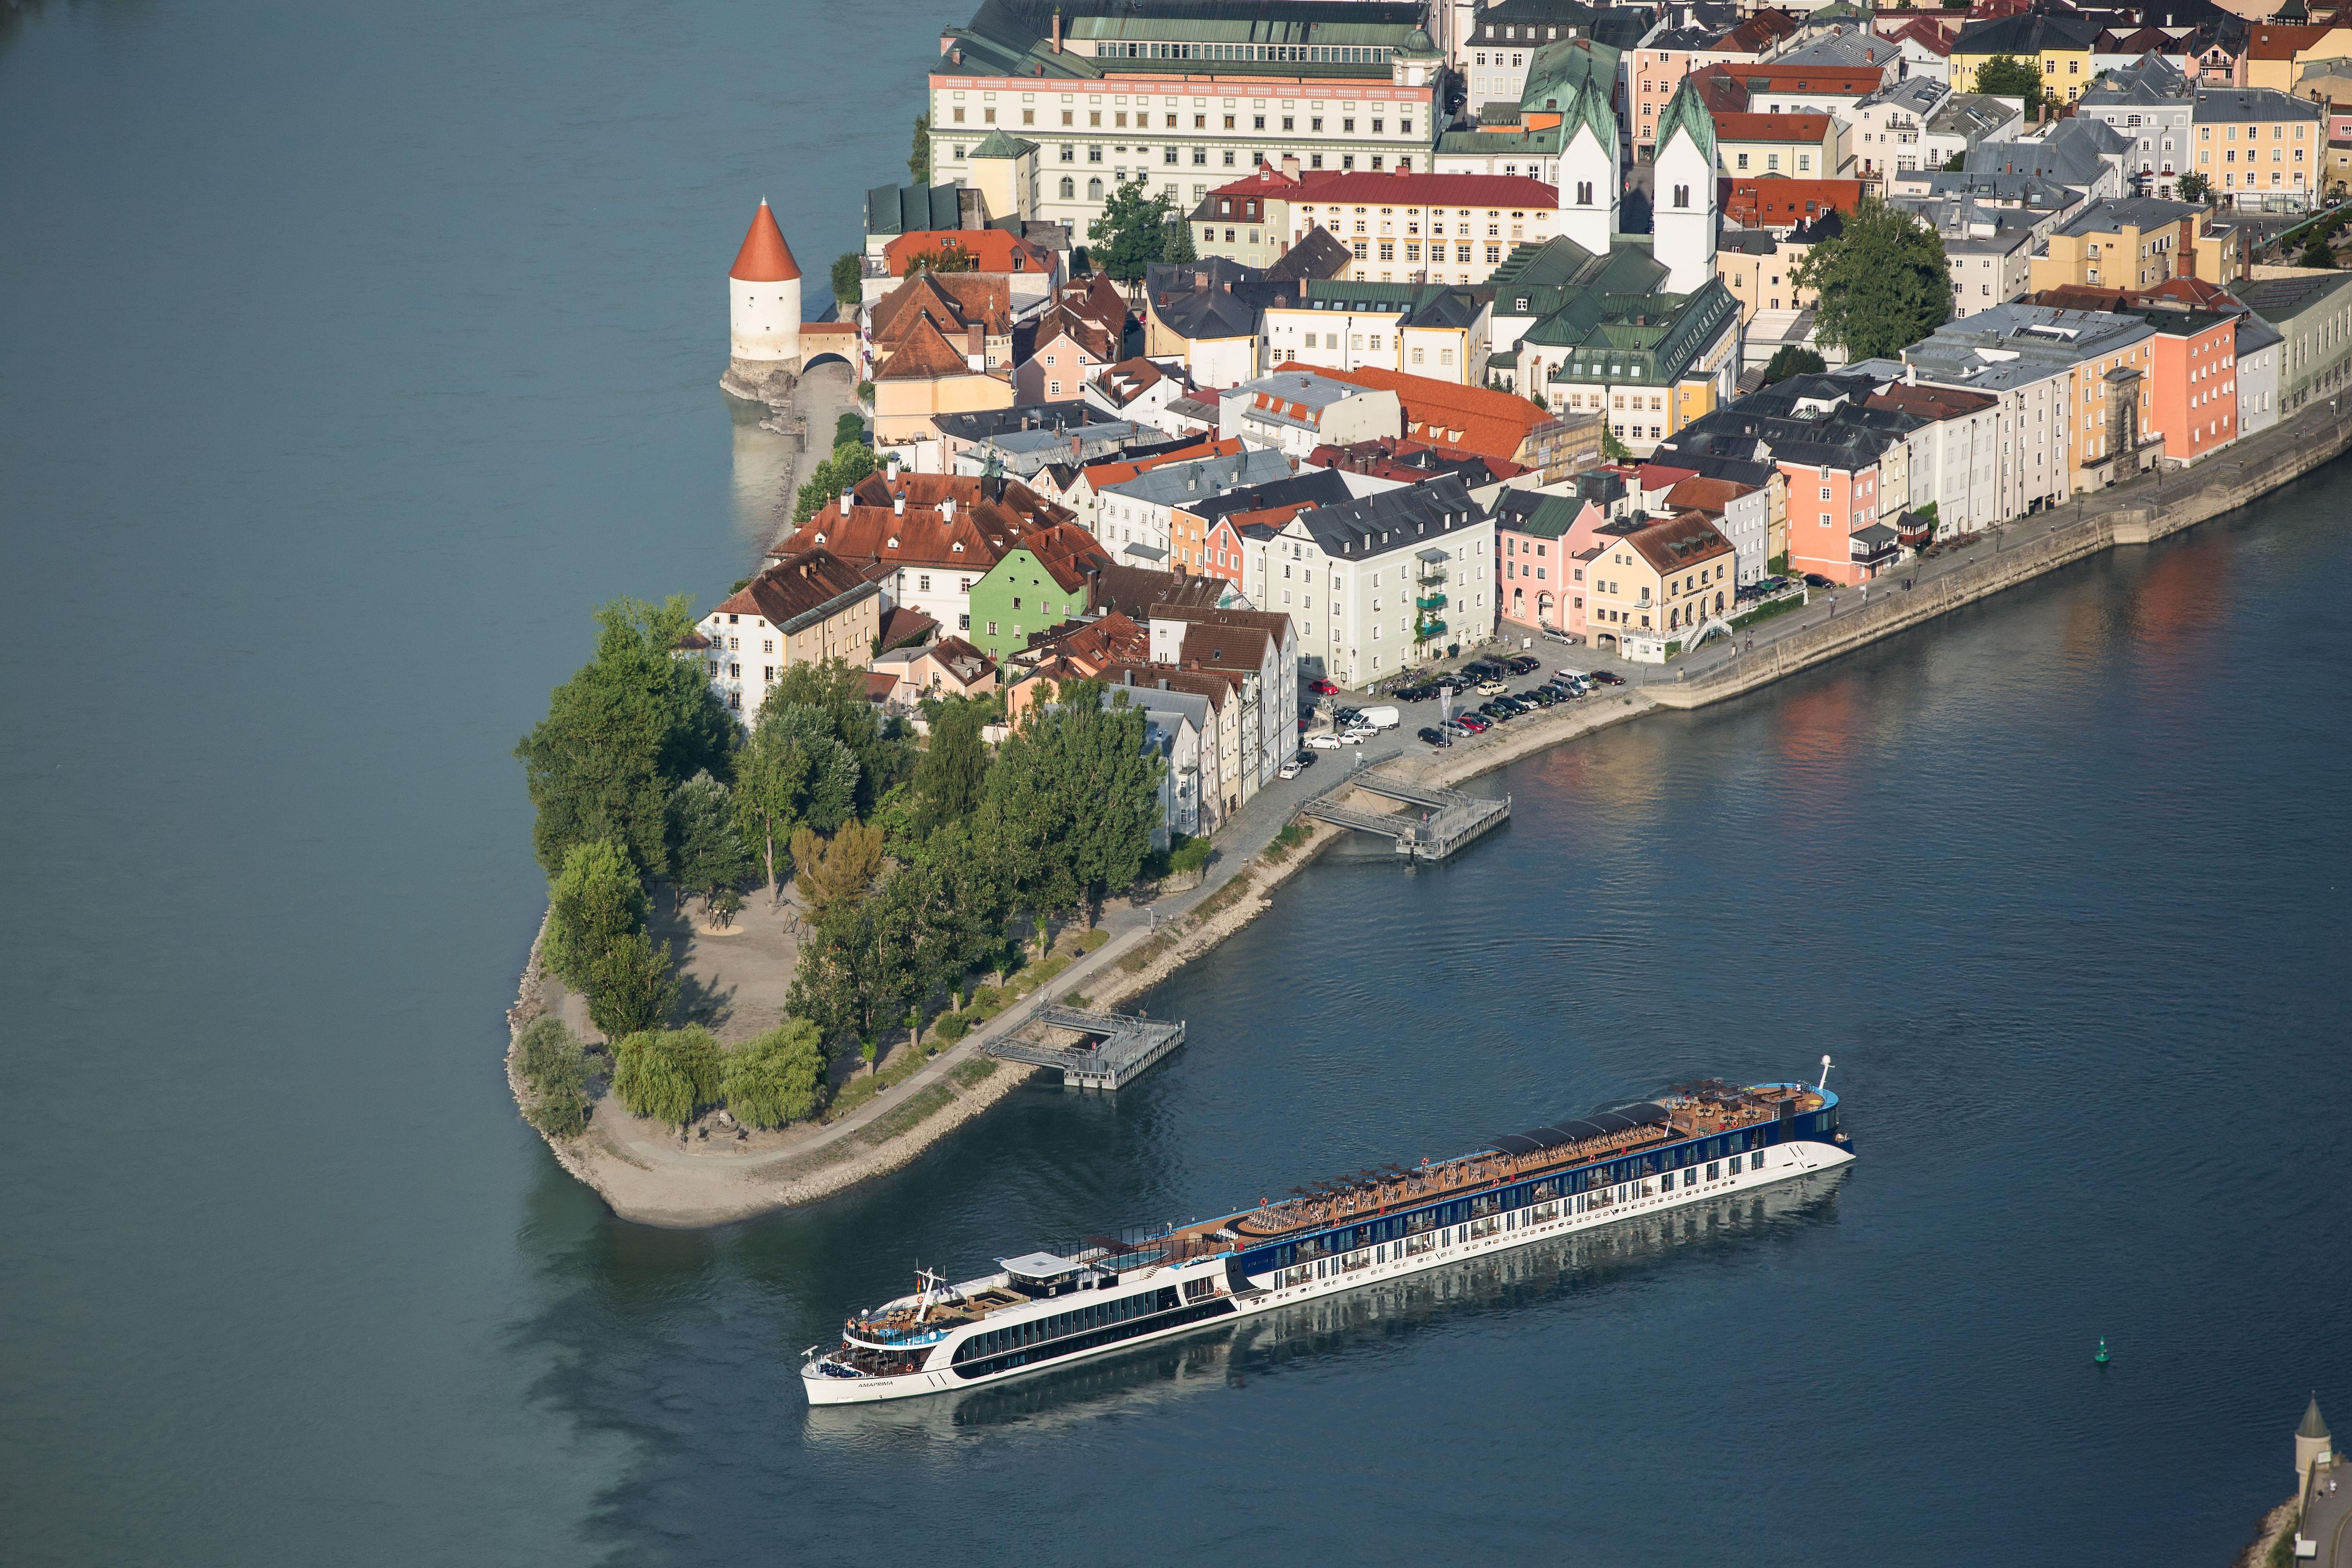 https://www.amawaterways.com/Assets/Gallery/Large/AmaPrima_Aerial_Passau_Landscape.jpg